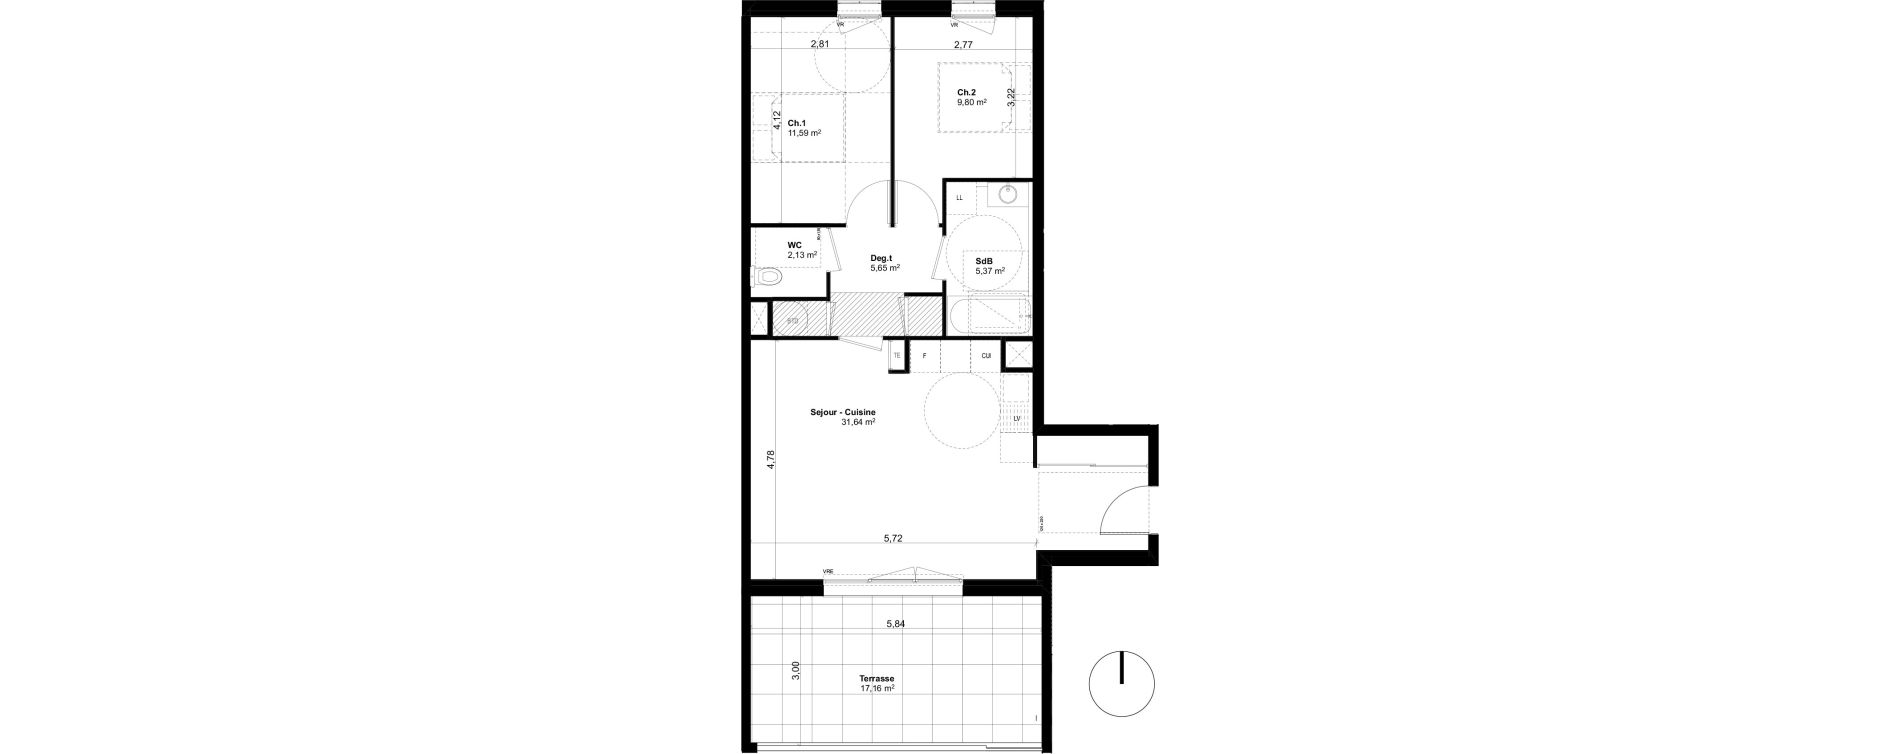 Appartement T3 de 66,18 m2 &agrave; Ventabren L heritiere